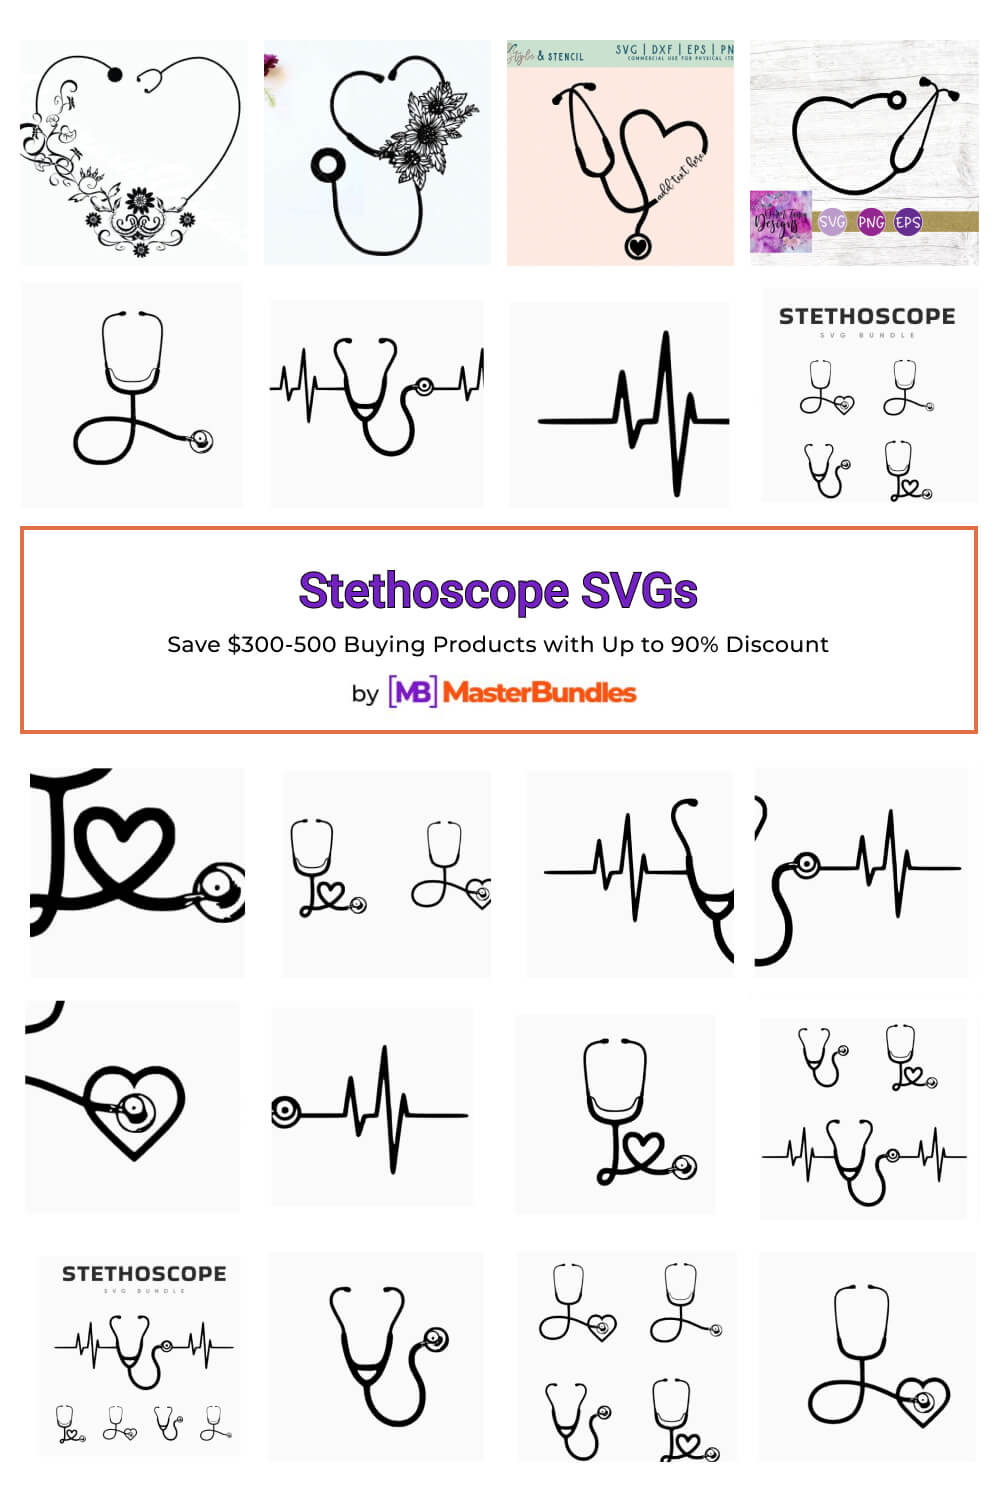 stethoscope svgs pinterest image.